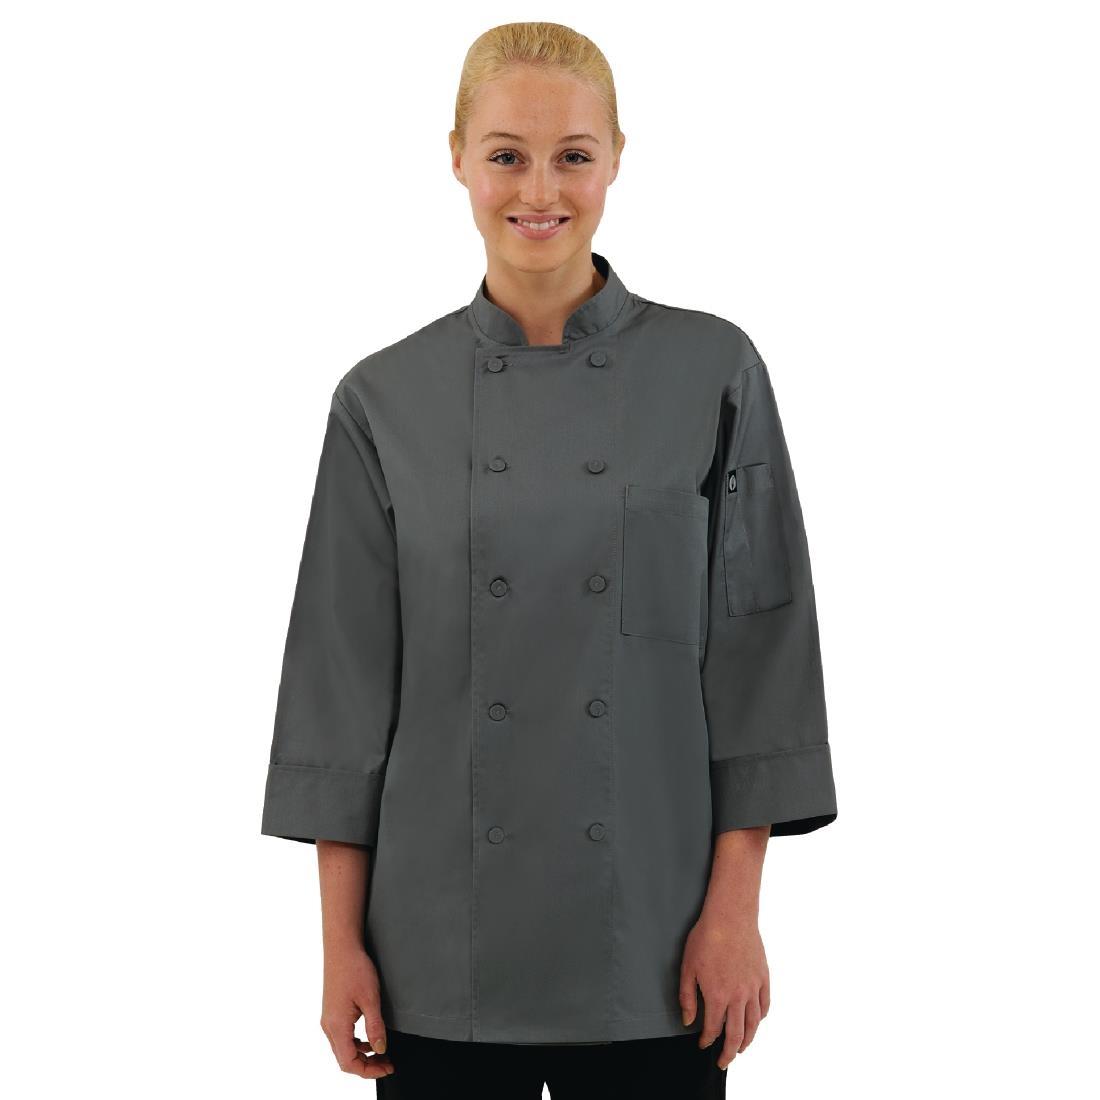 Chef Works Unisex Chefs Jacket Grey M - A934-M  - 1